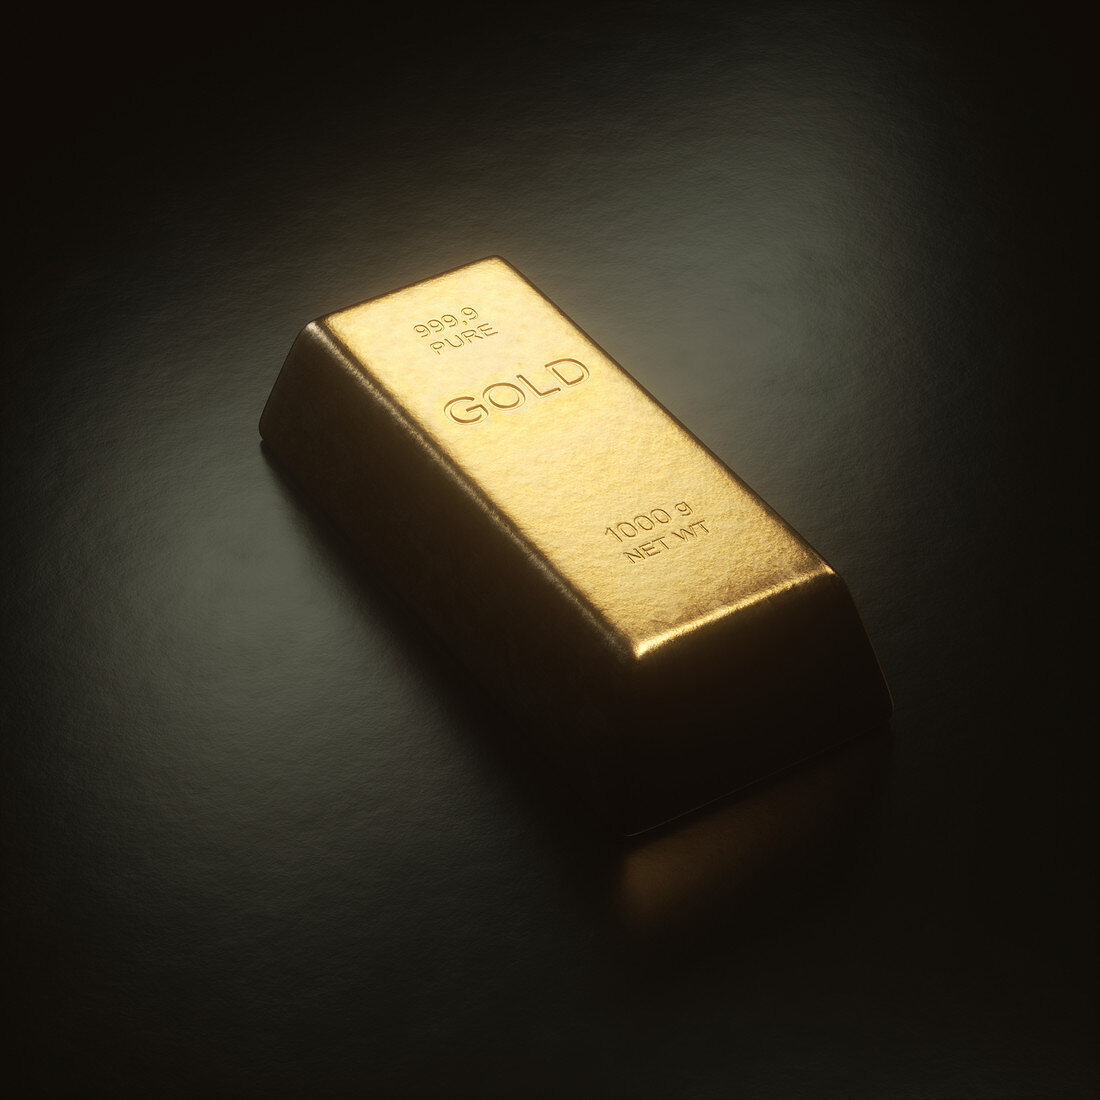 Gold bar, illustration